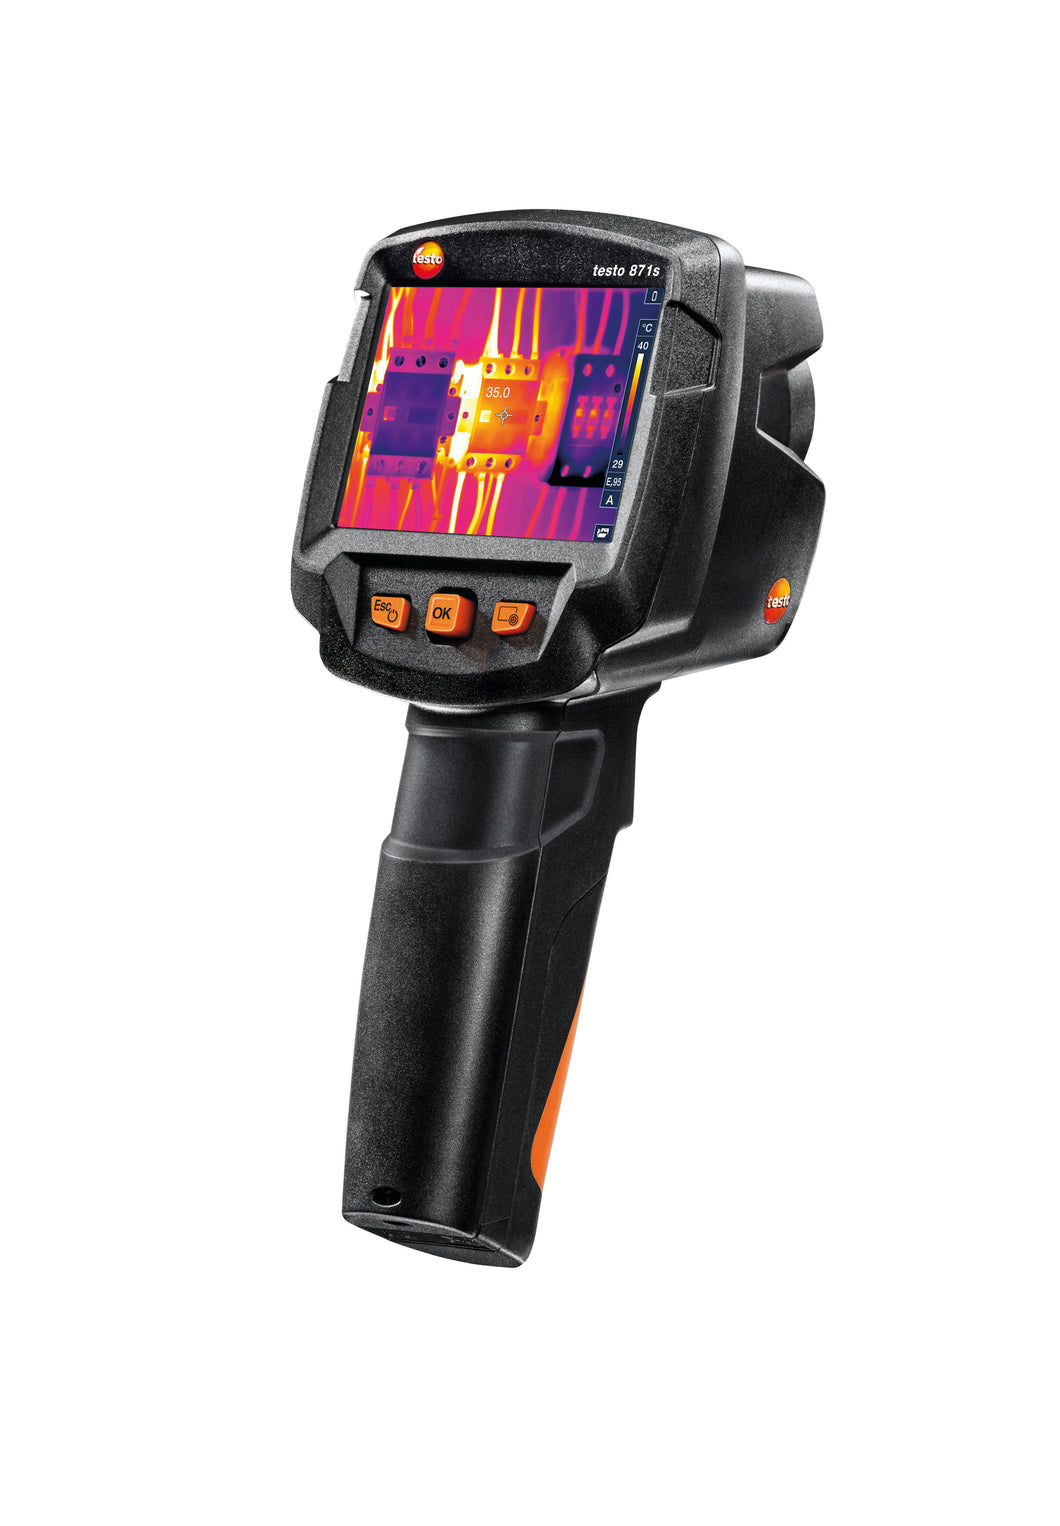 testo 871s - The new range of thermal imaging cameras! 0560 8716 Thermal Imaging Camera